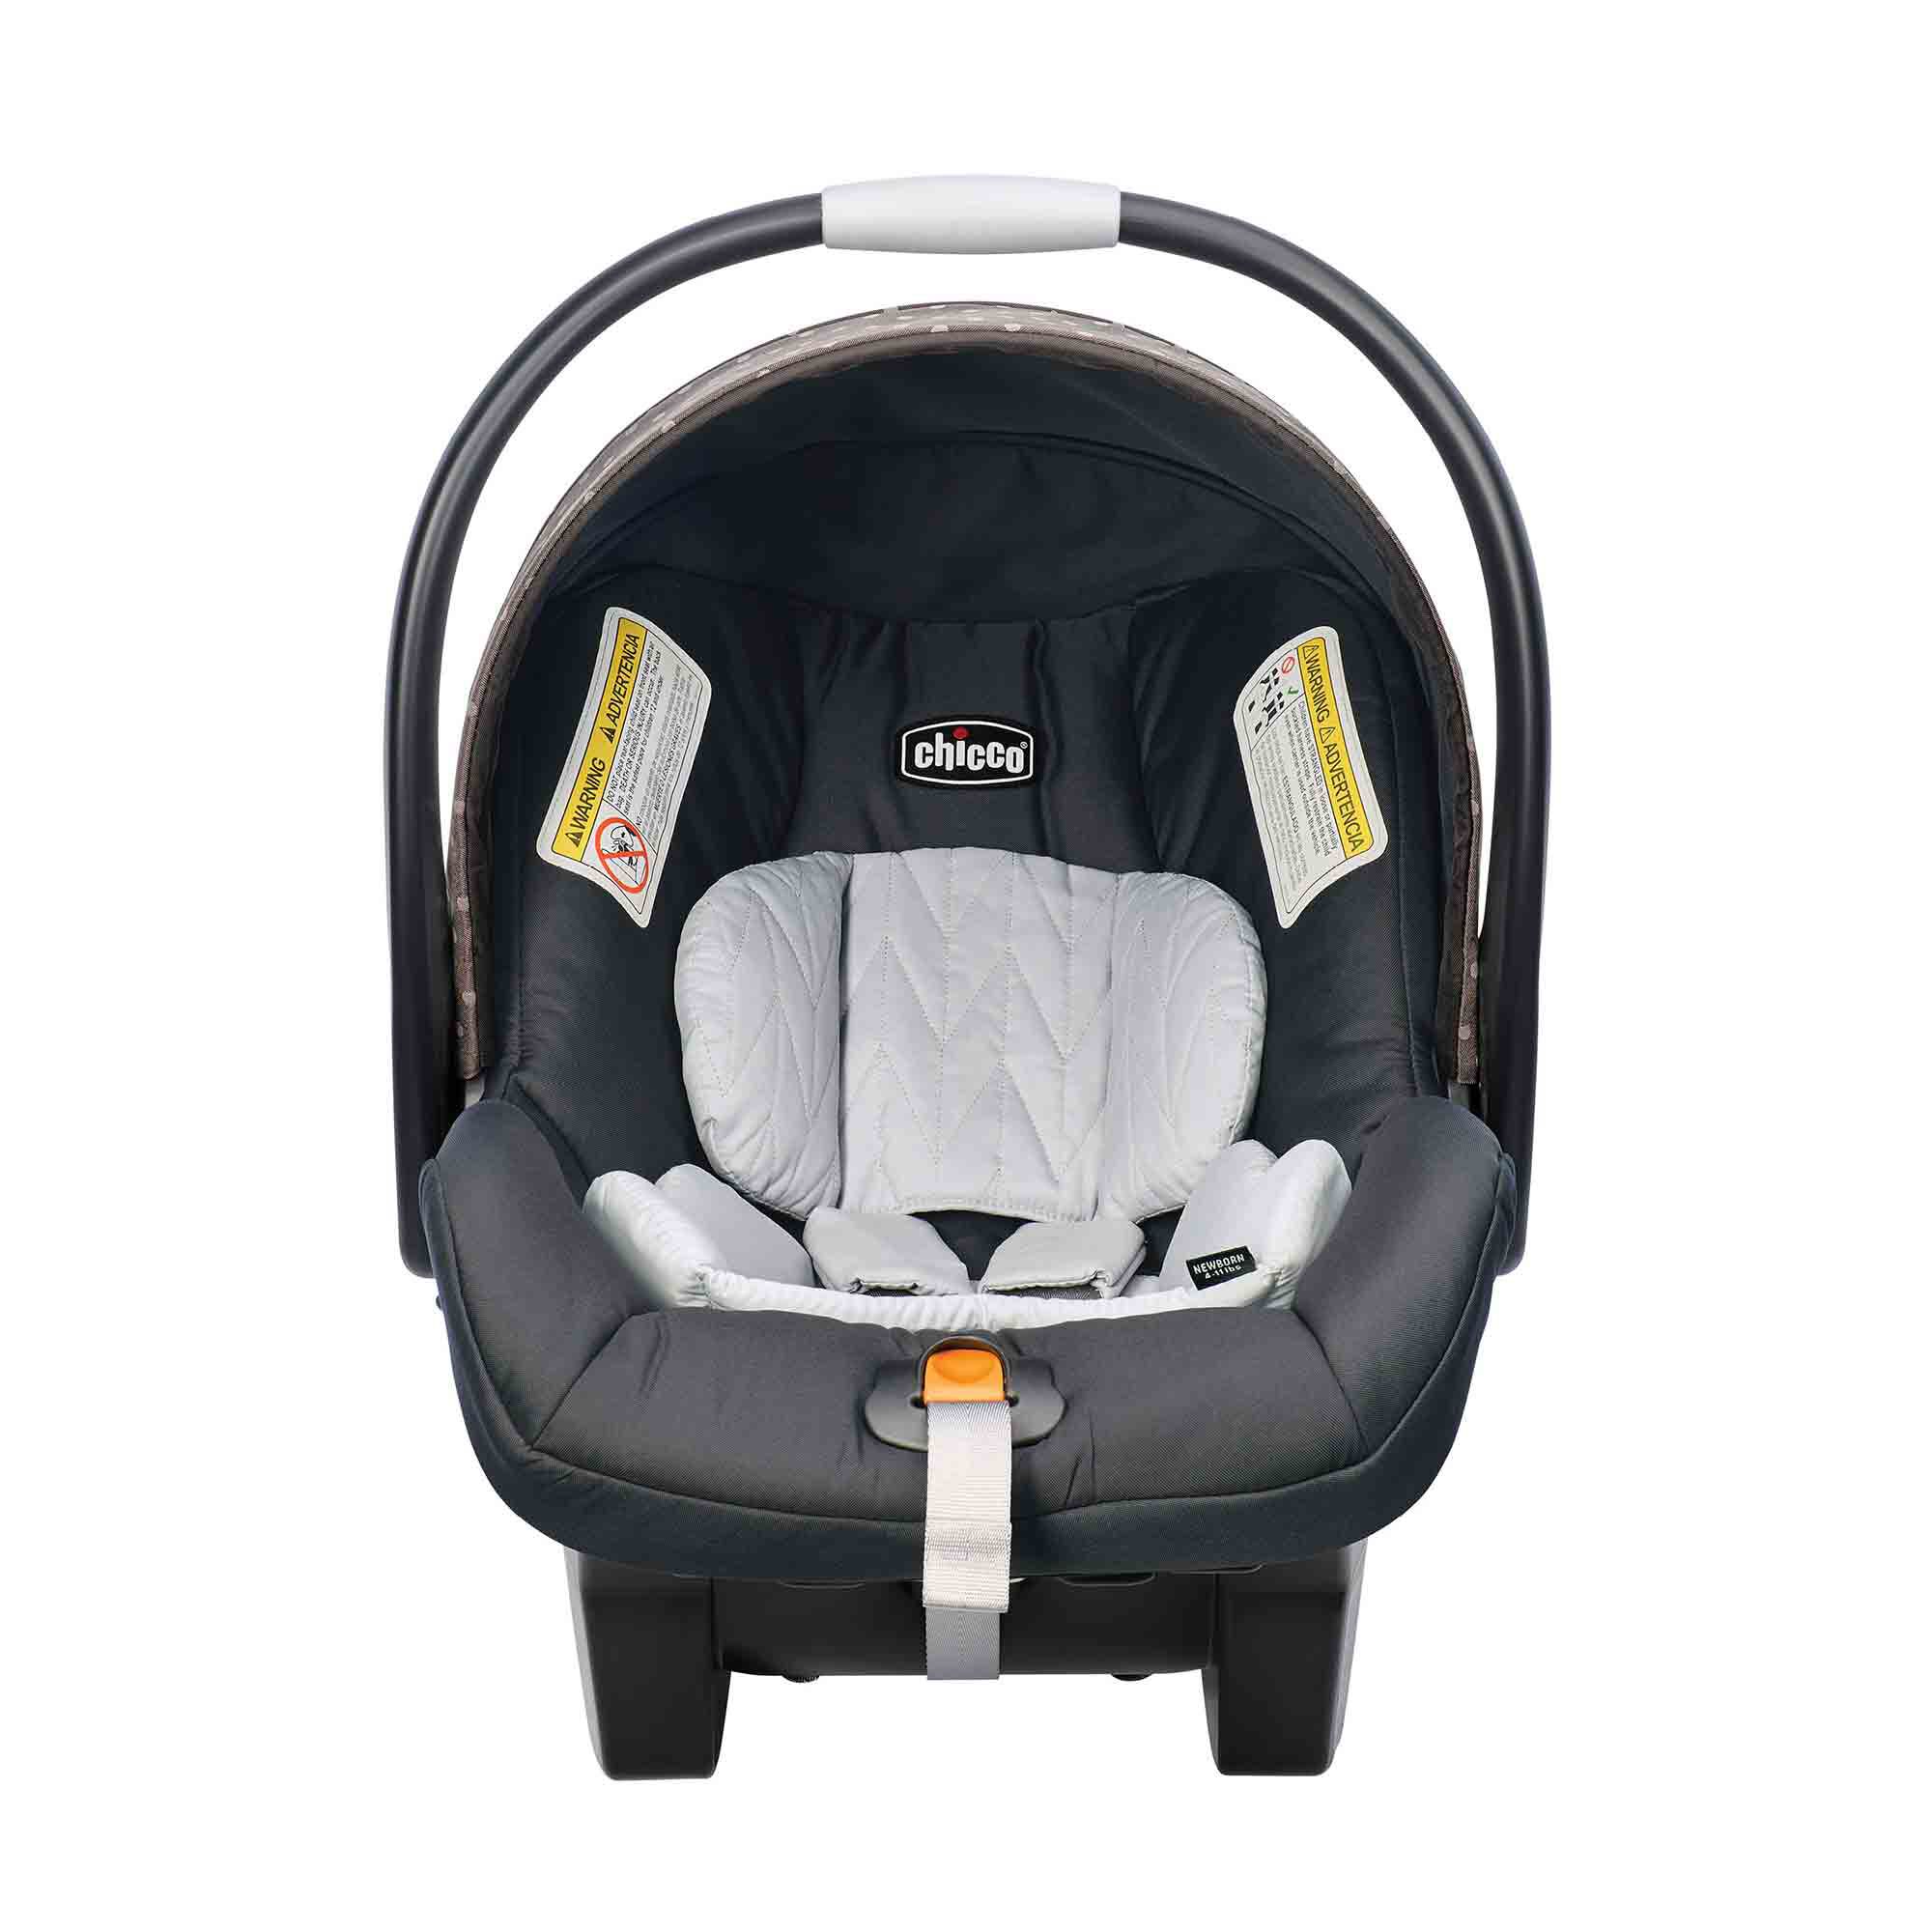 Keyfit 30 Infant Car Seat Calla Chicco